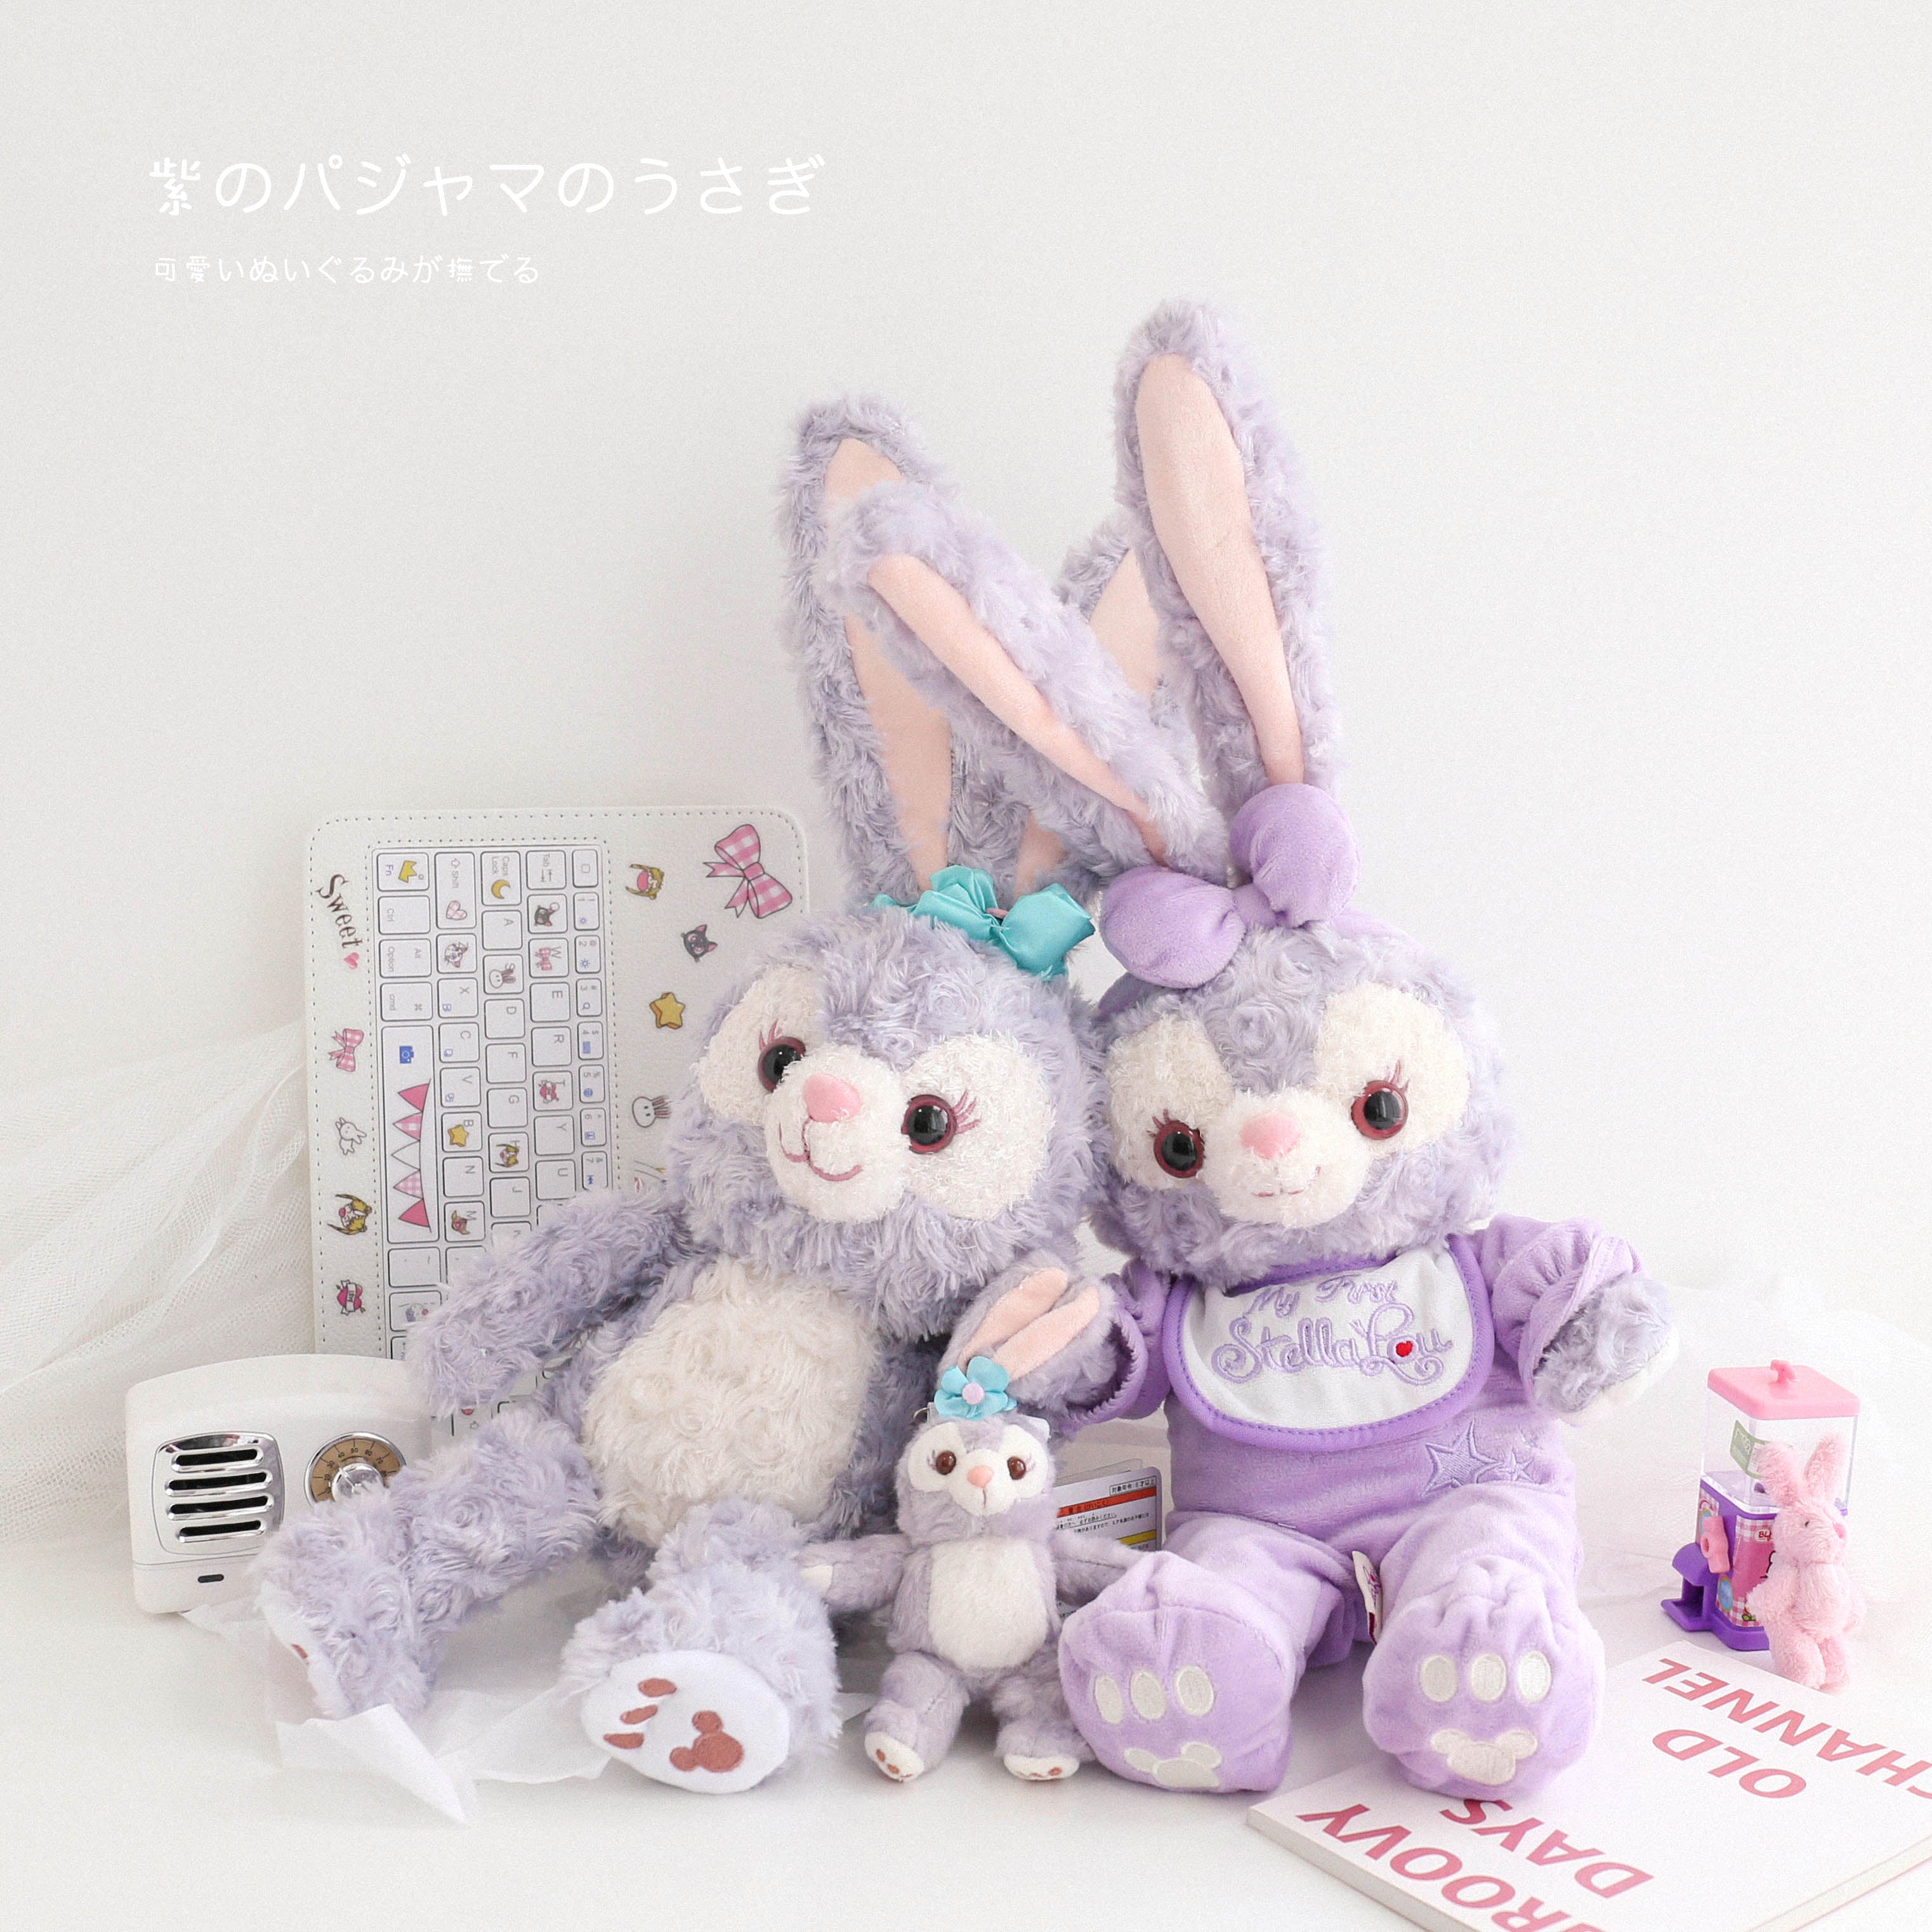 Charming Plush Rabbit Doll